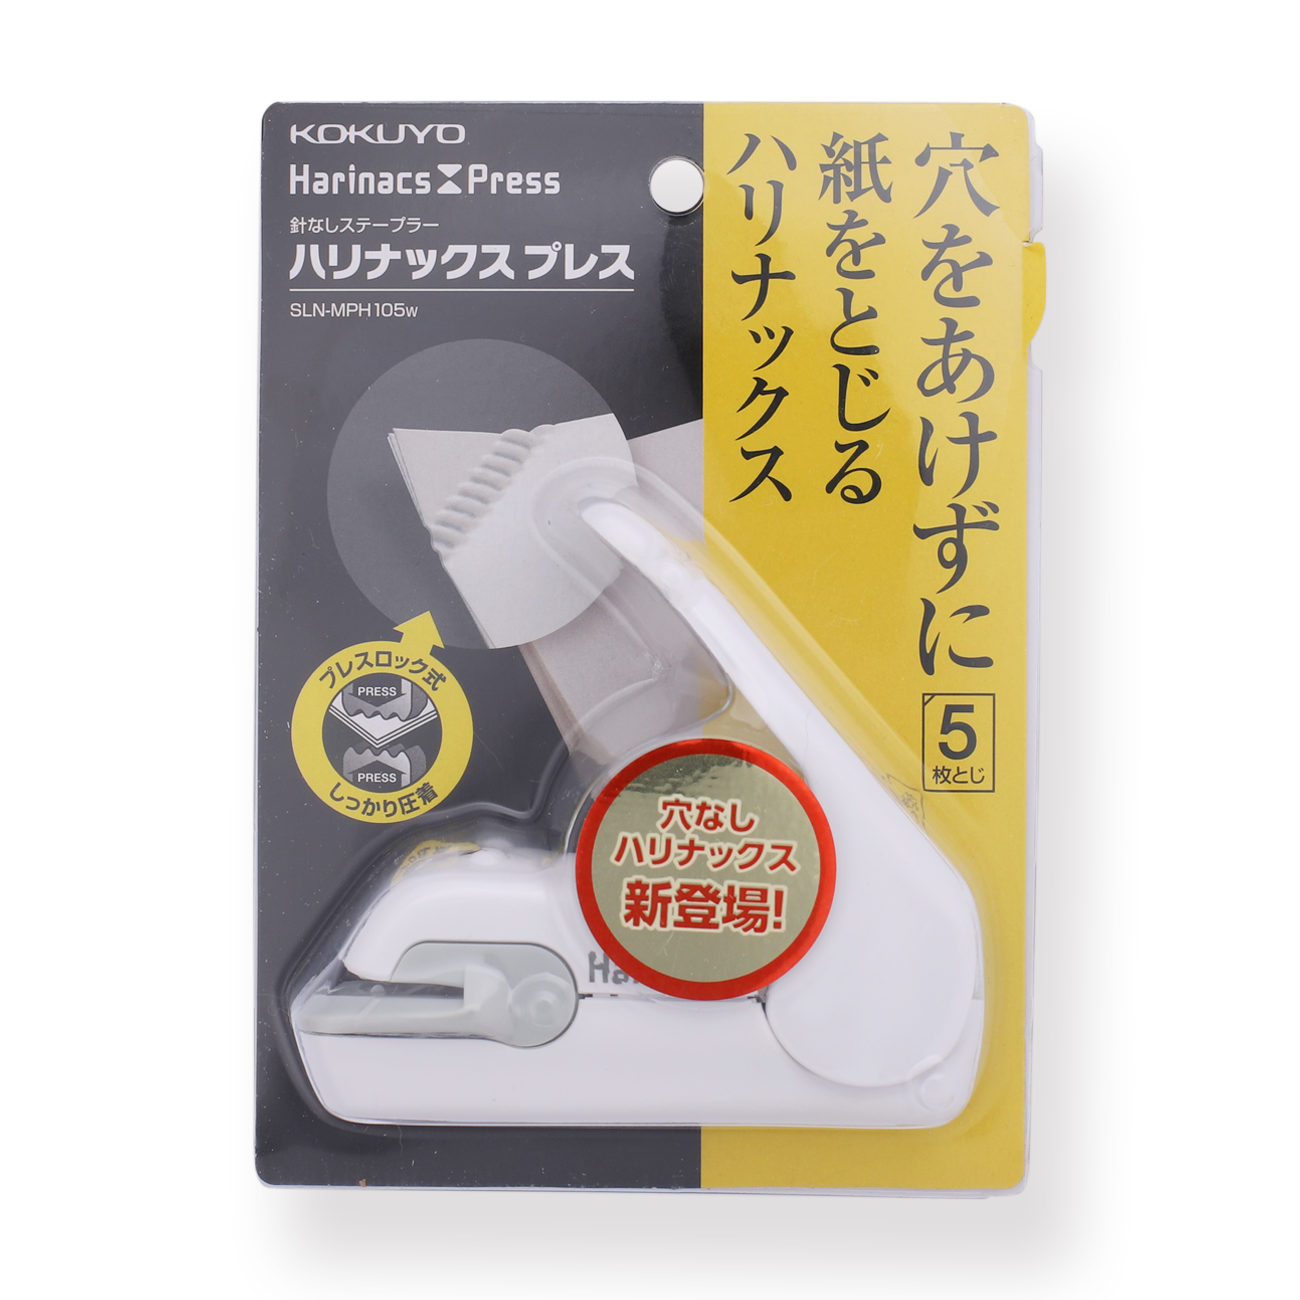 Kokuyo SLN-MPH105 Harinacs Press Stapleless Stapler - White - Stationery Pal